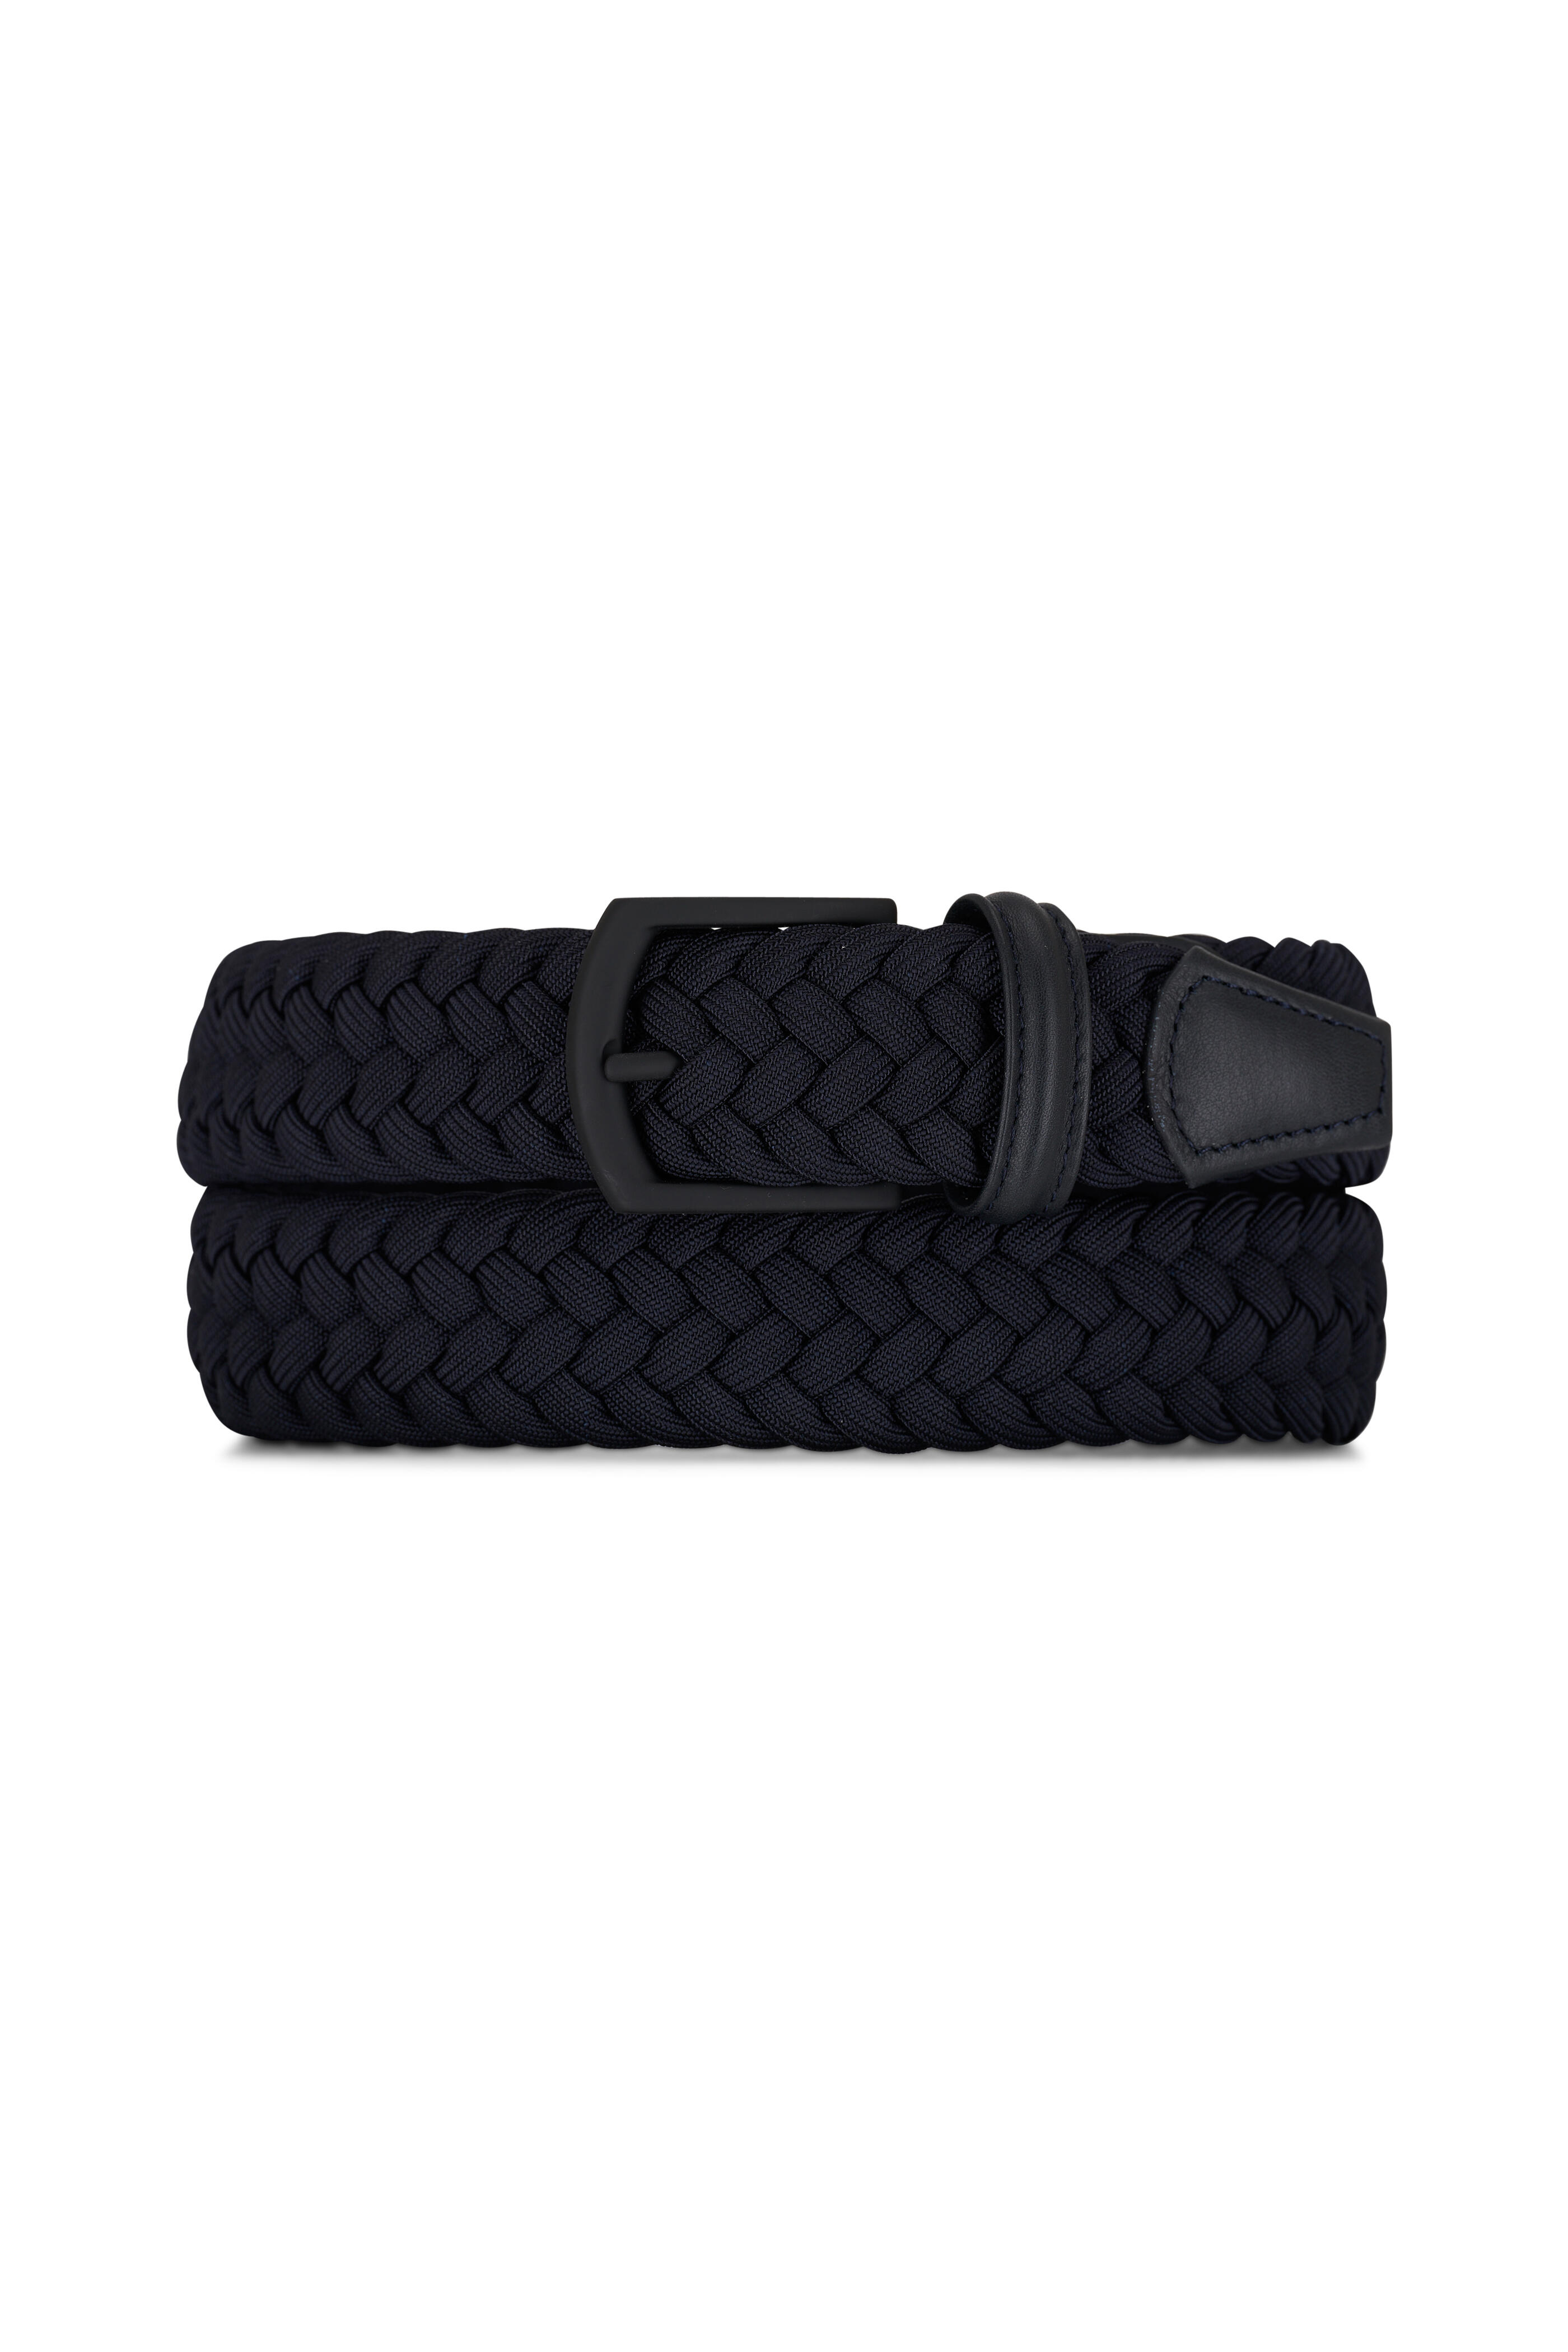 Anderson's - Navy & Gray Braided Belt